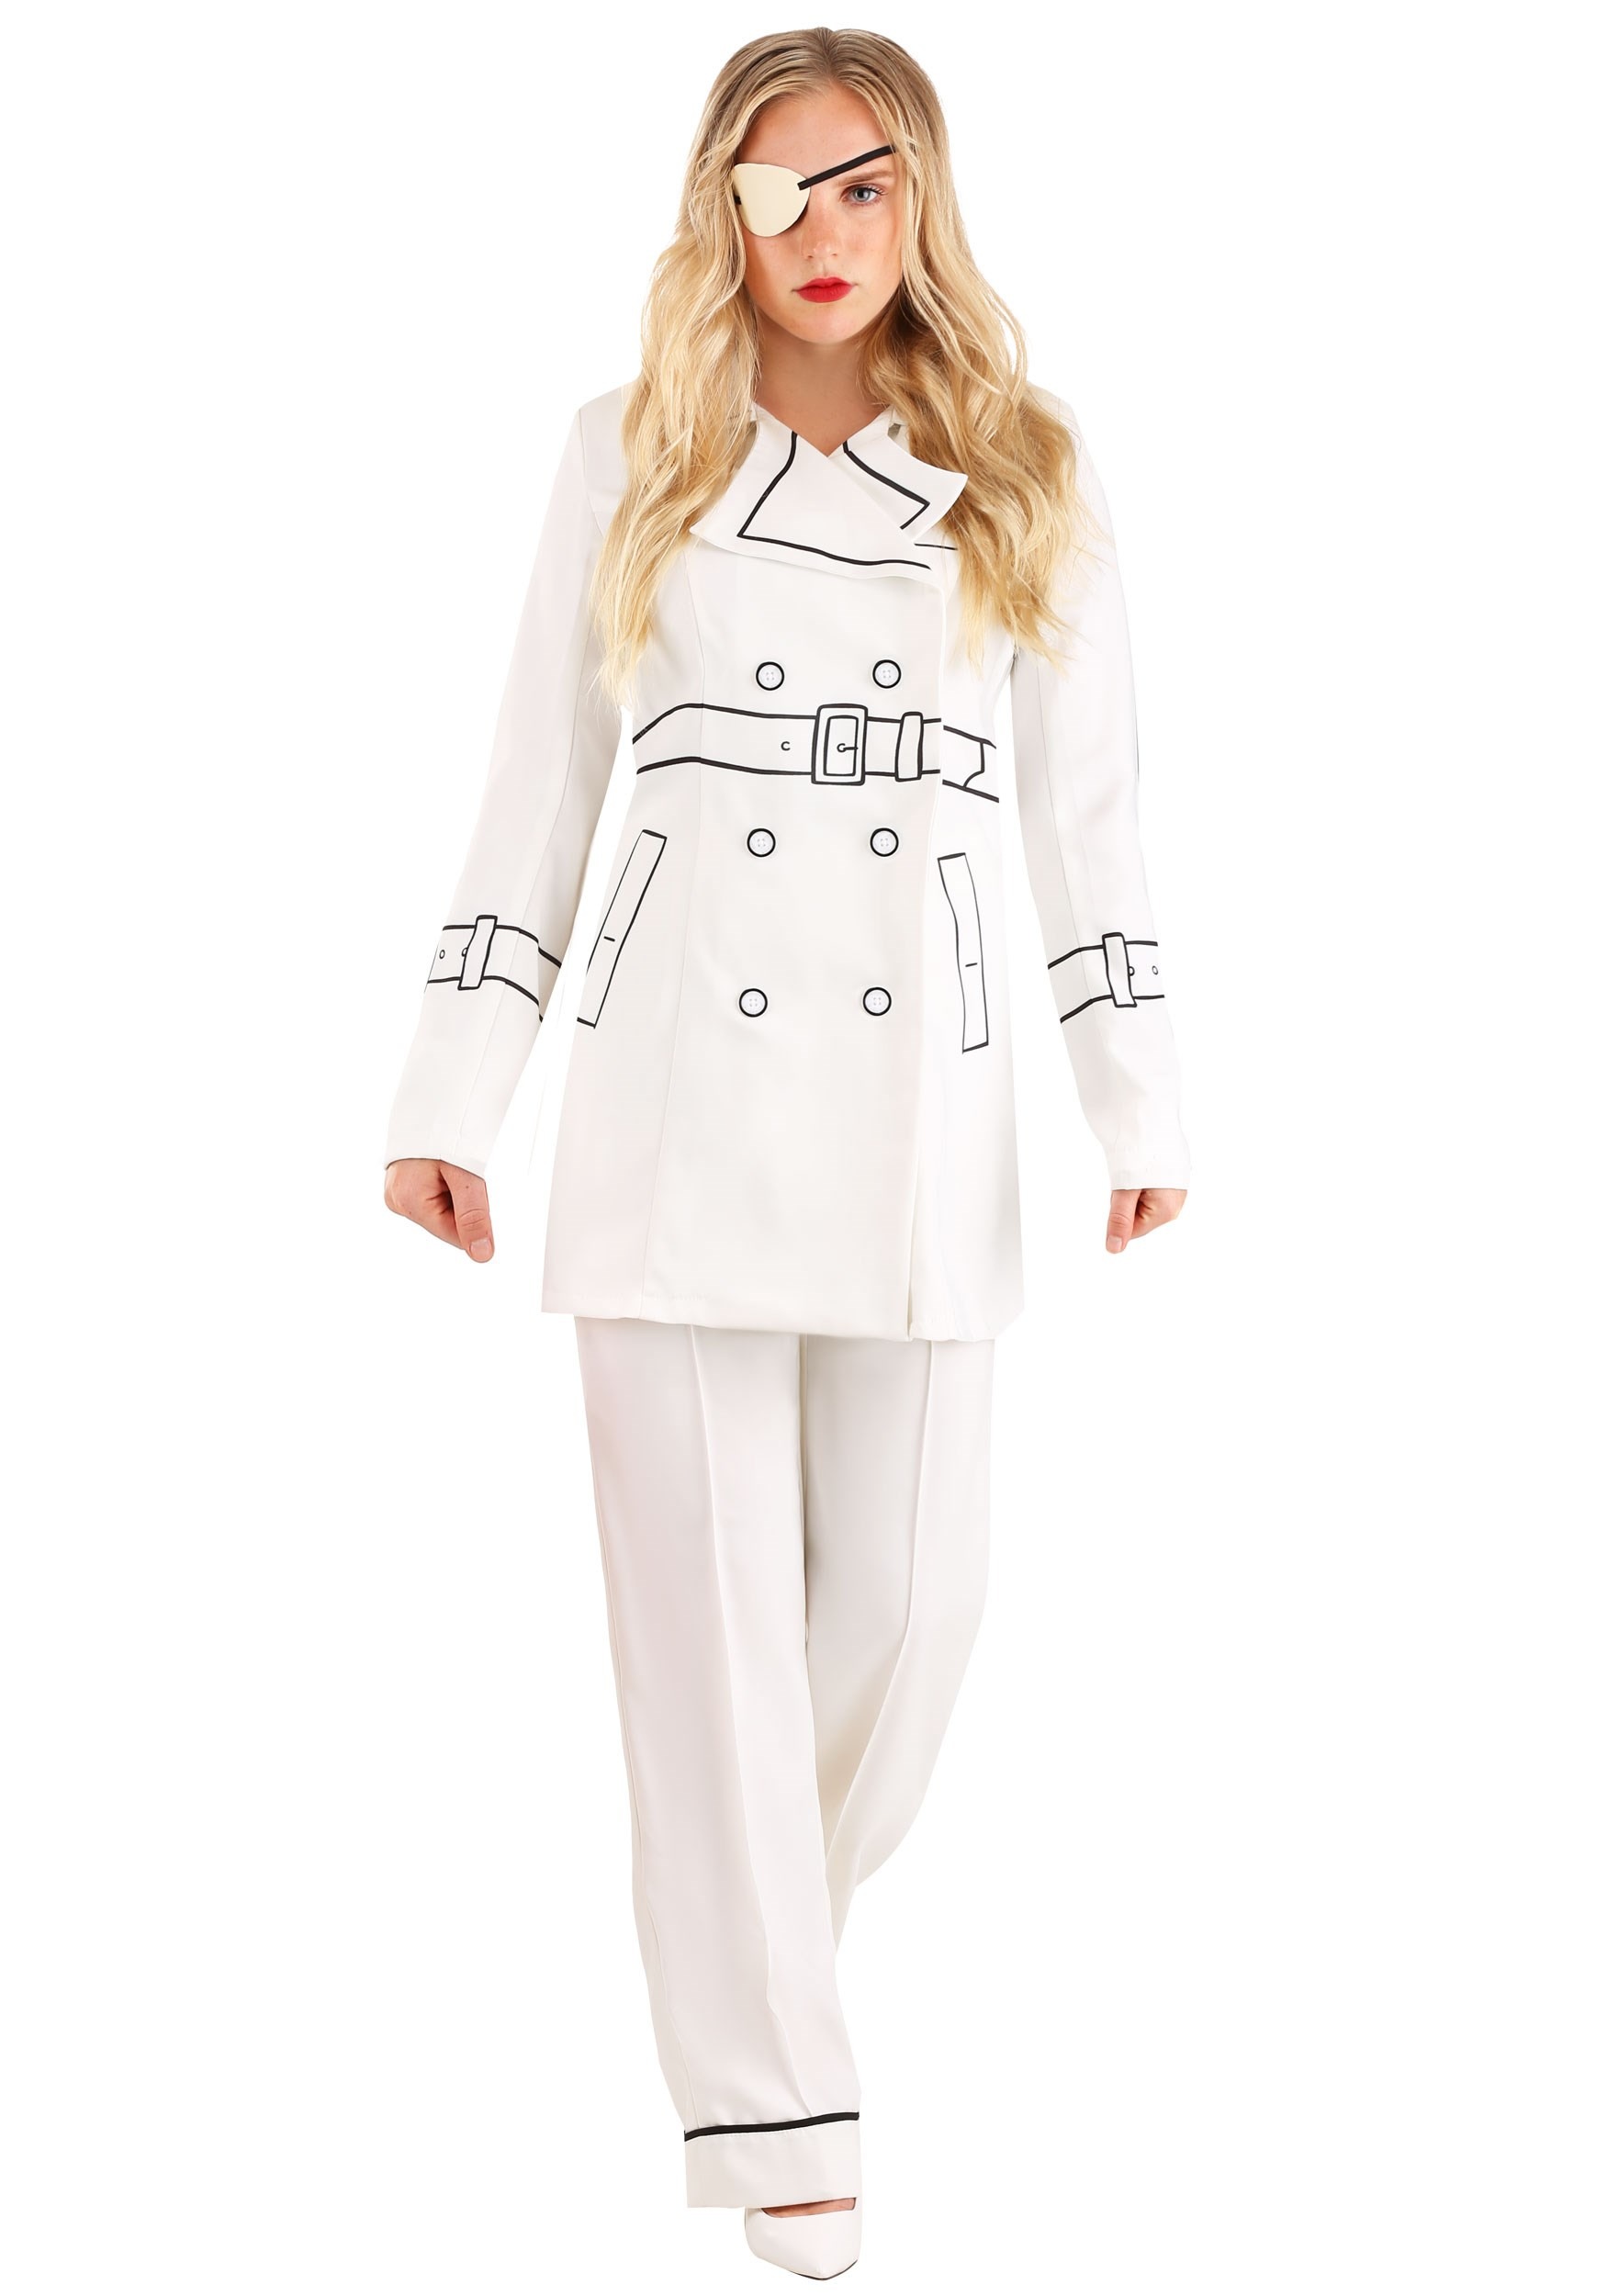 Image of Kill Bill Elle Driver Trench Coat Costume for Women ID FUN9316AD-S